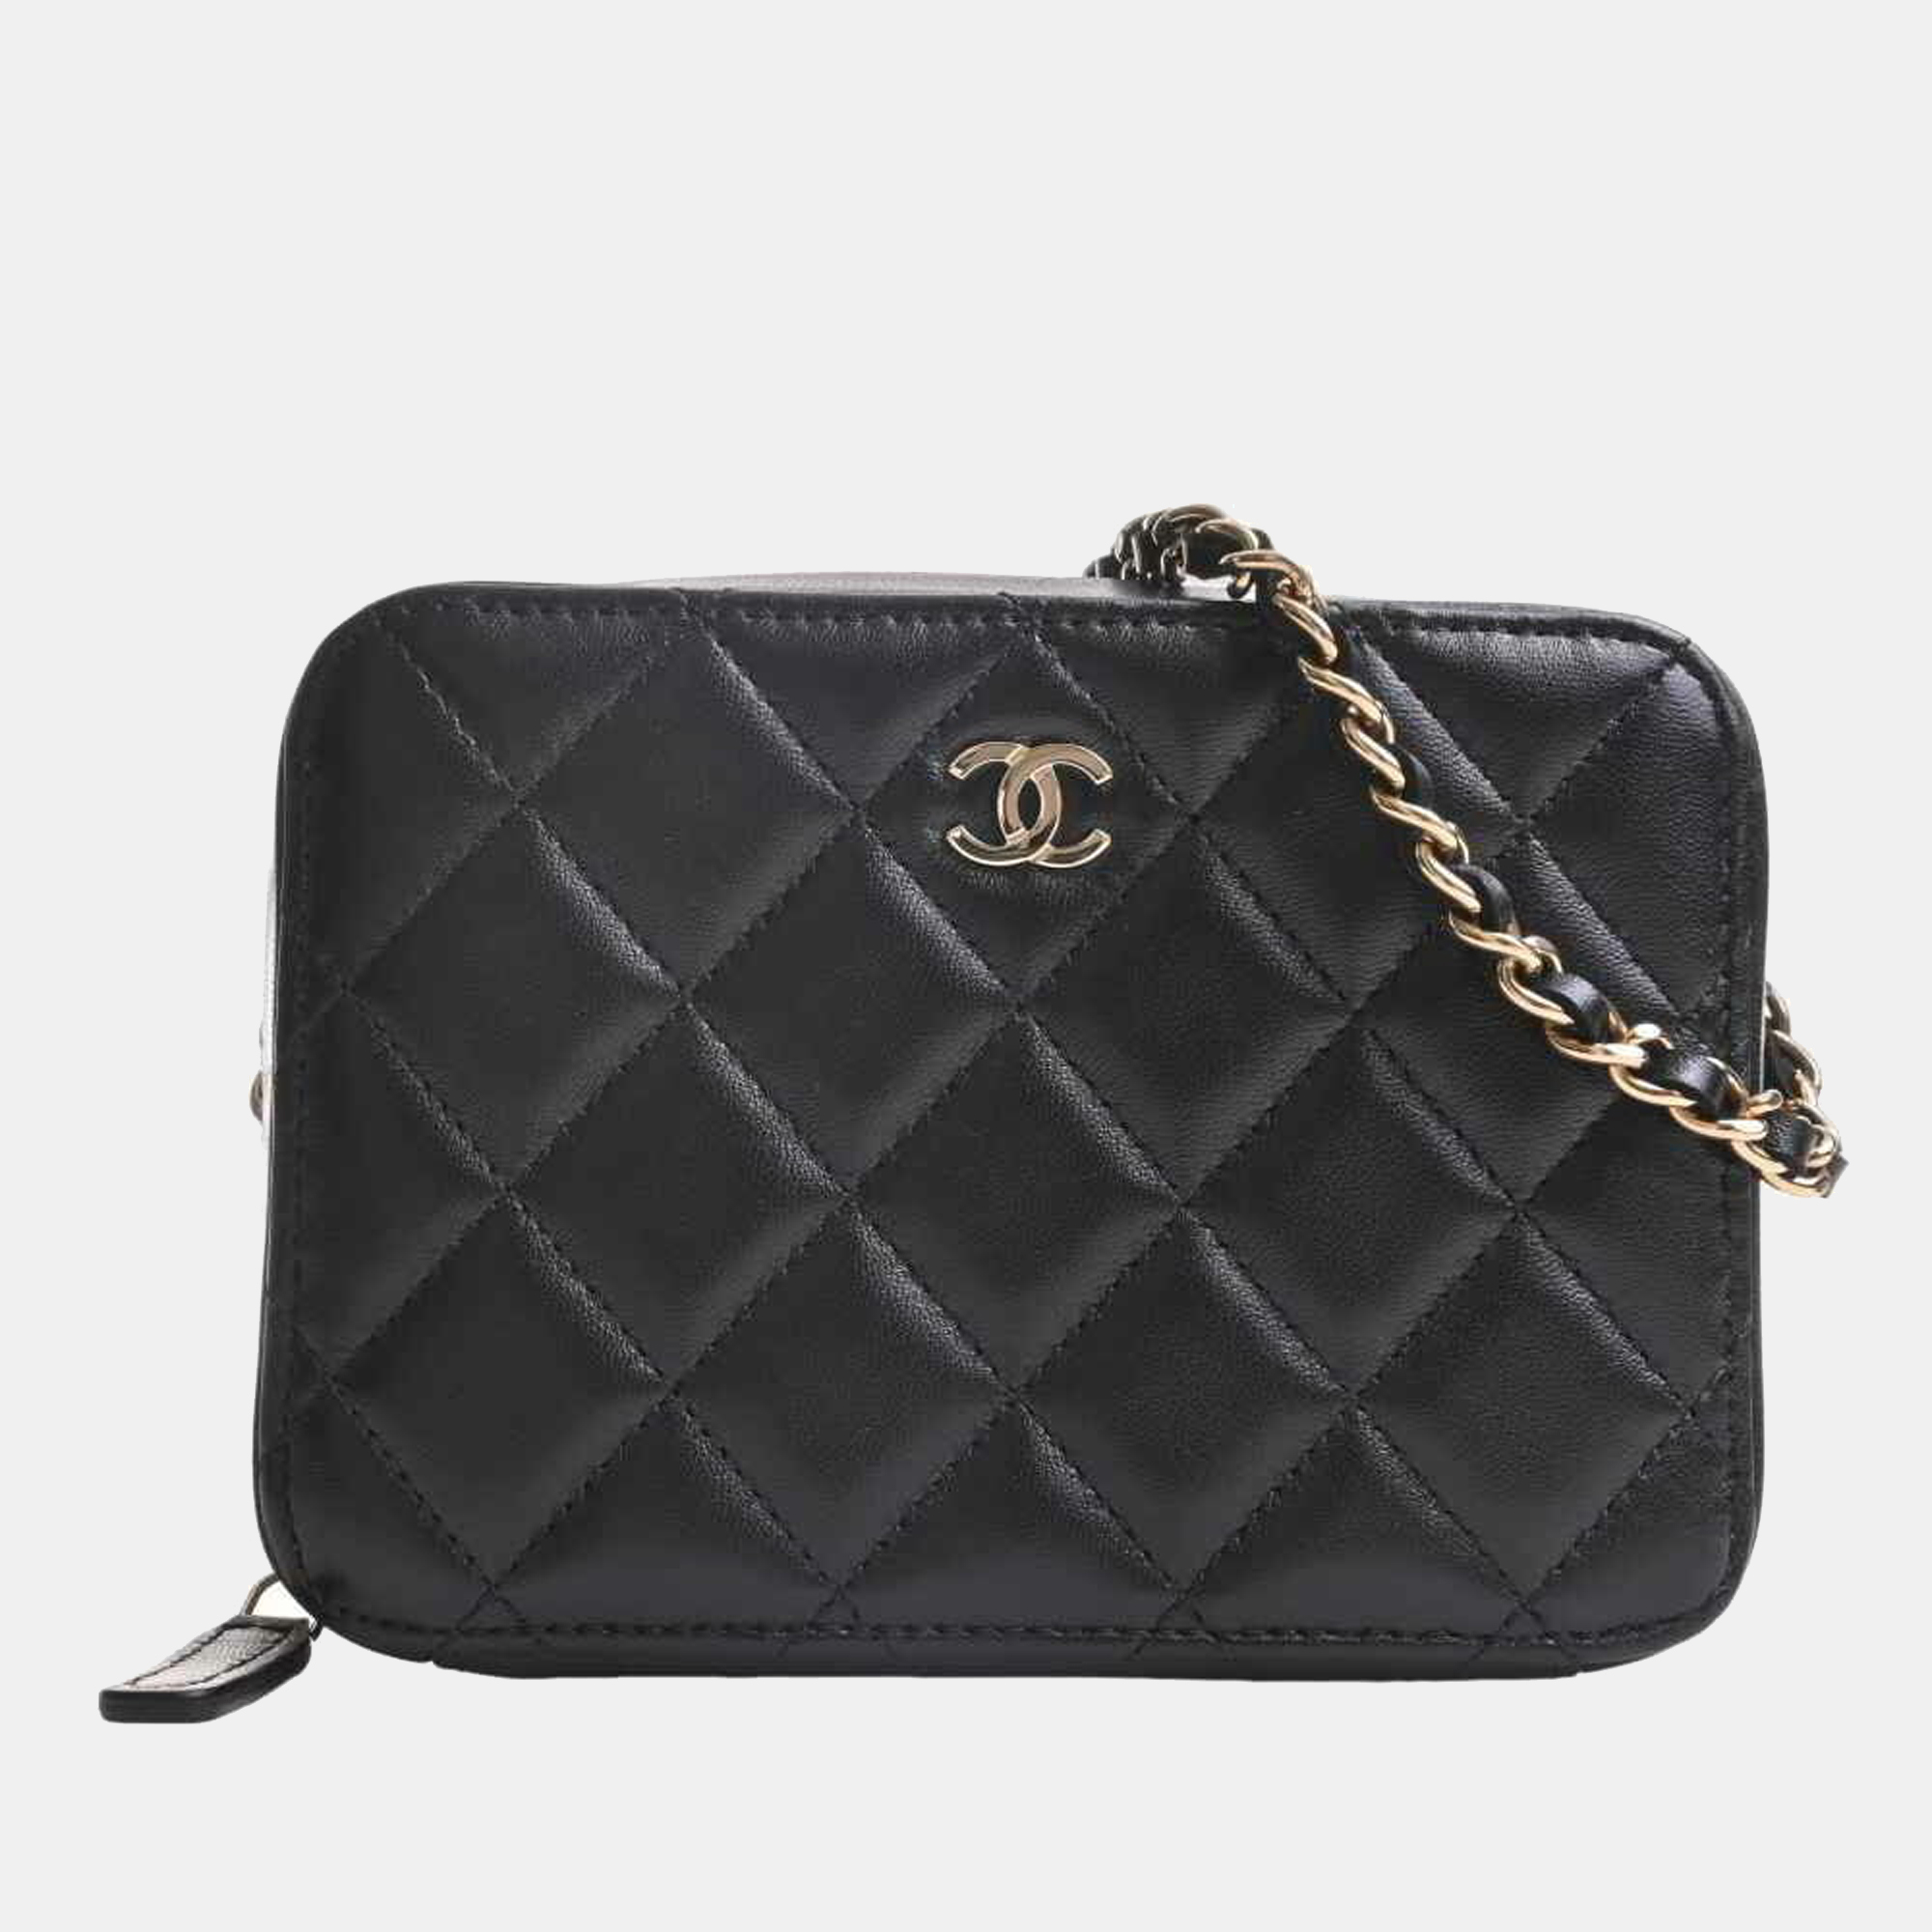 Chanel Black Fur Mini Vanity Bag